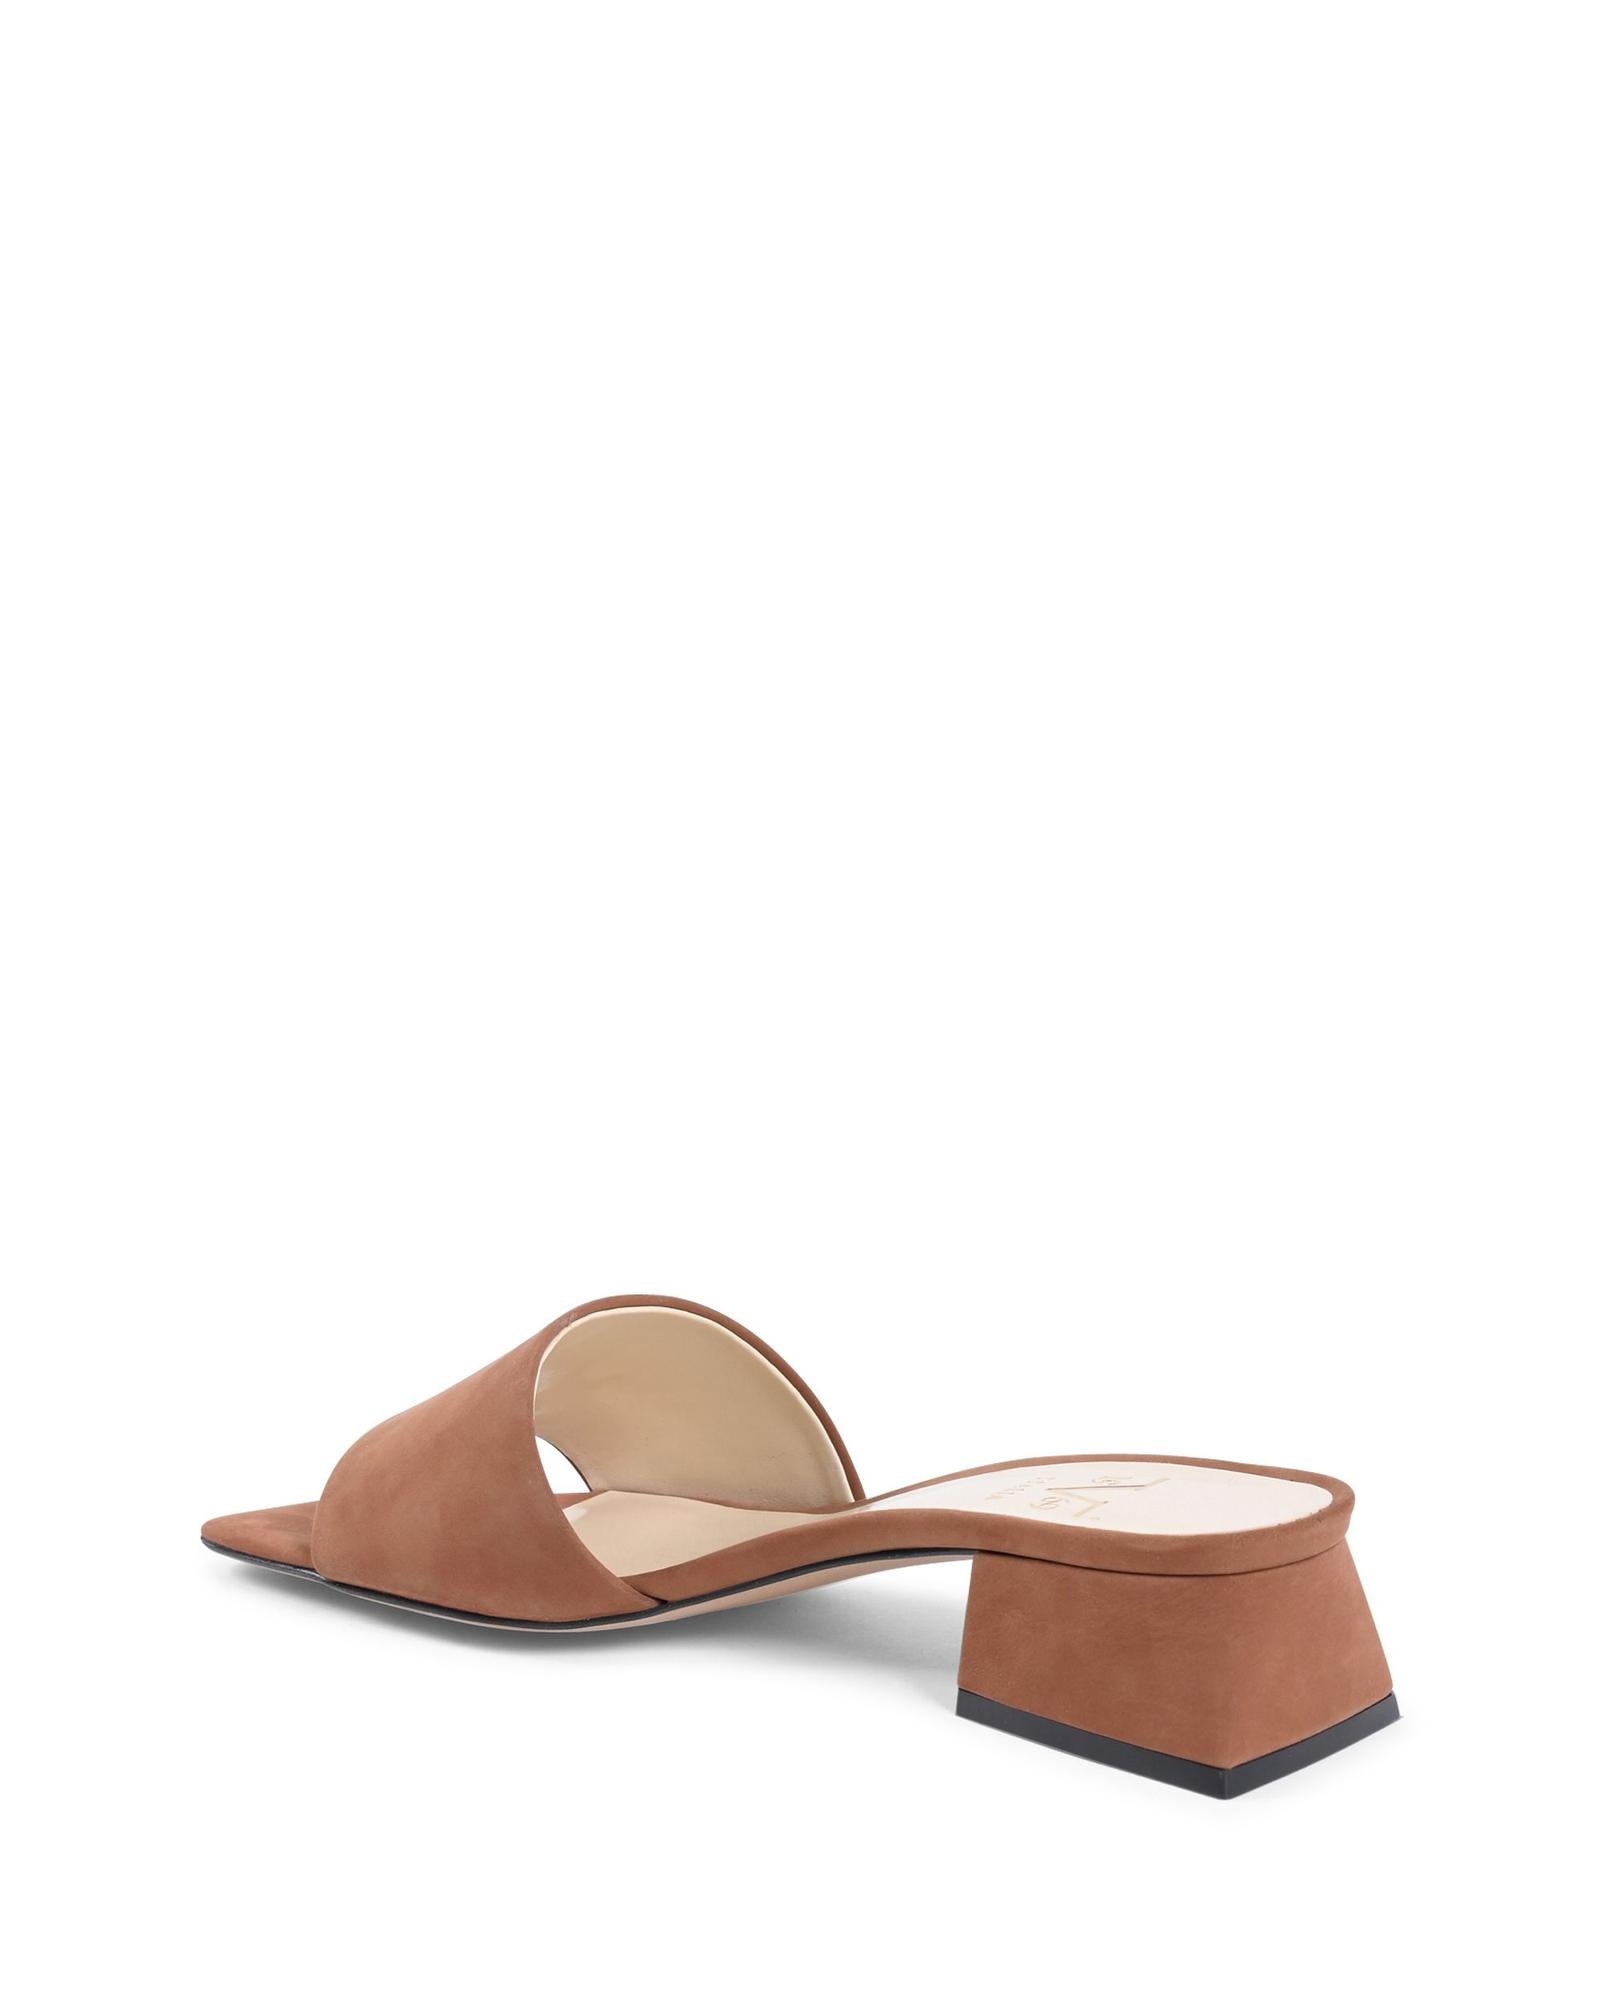 Italian Leather Sandals with 4cm Heel - 41 EU